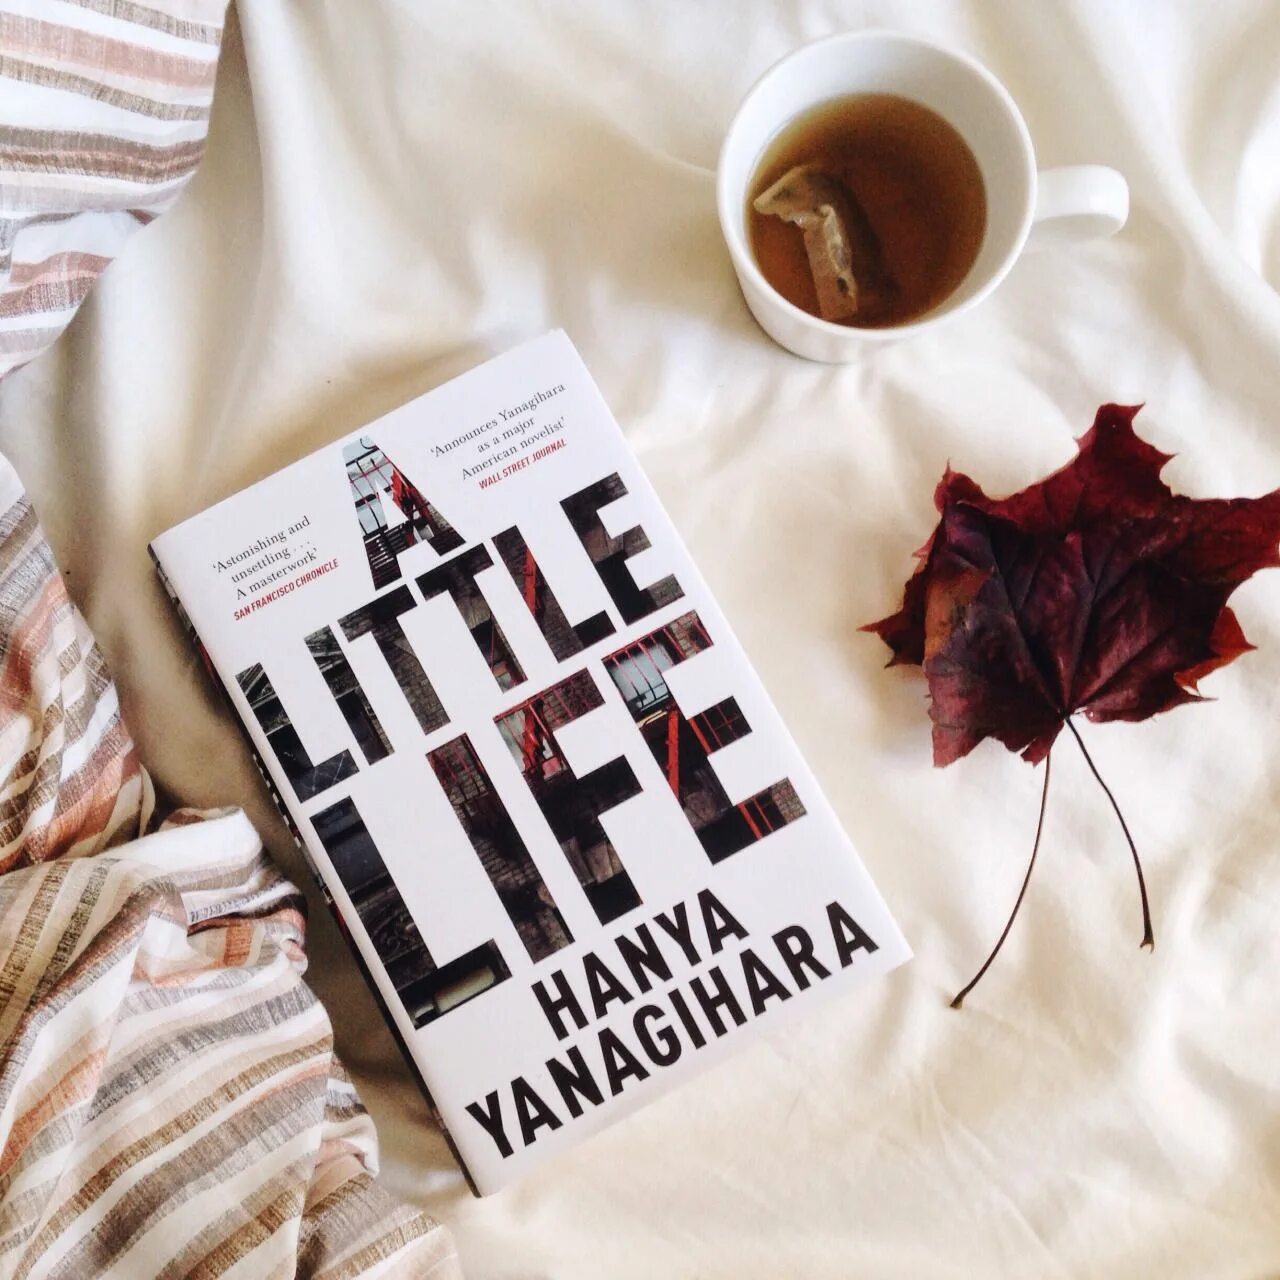 Маленькая жизнь Ханья Янагихара. A little Life книга. Обложка книги a little Life. Маленькая жизнь книга обложка. Little life book